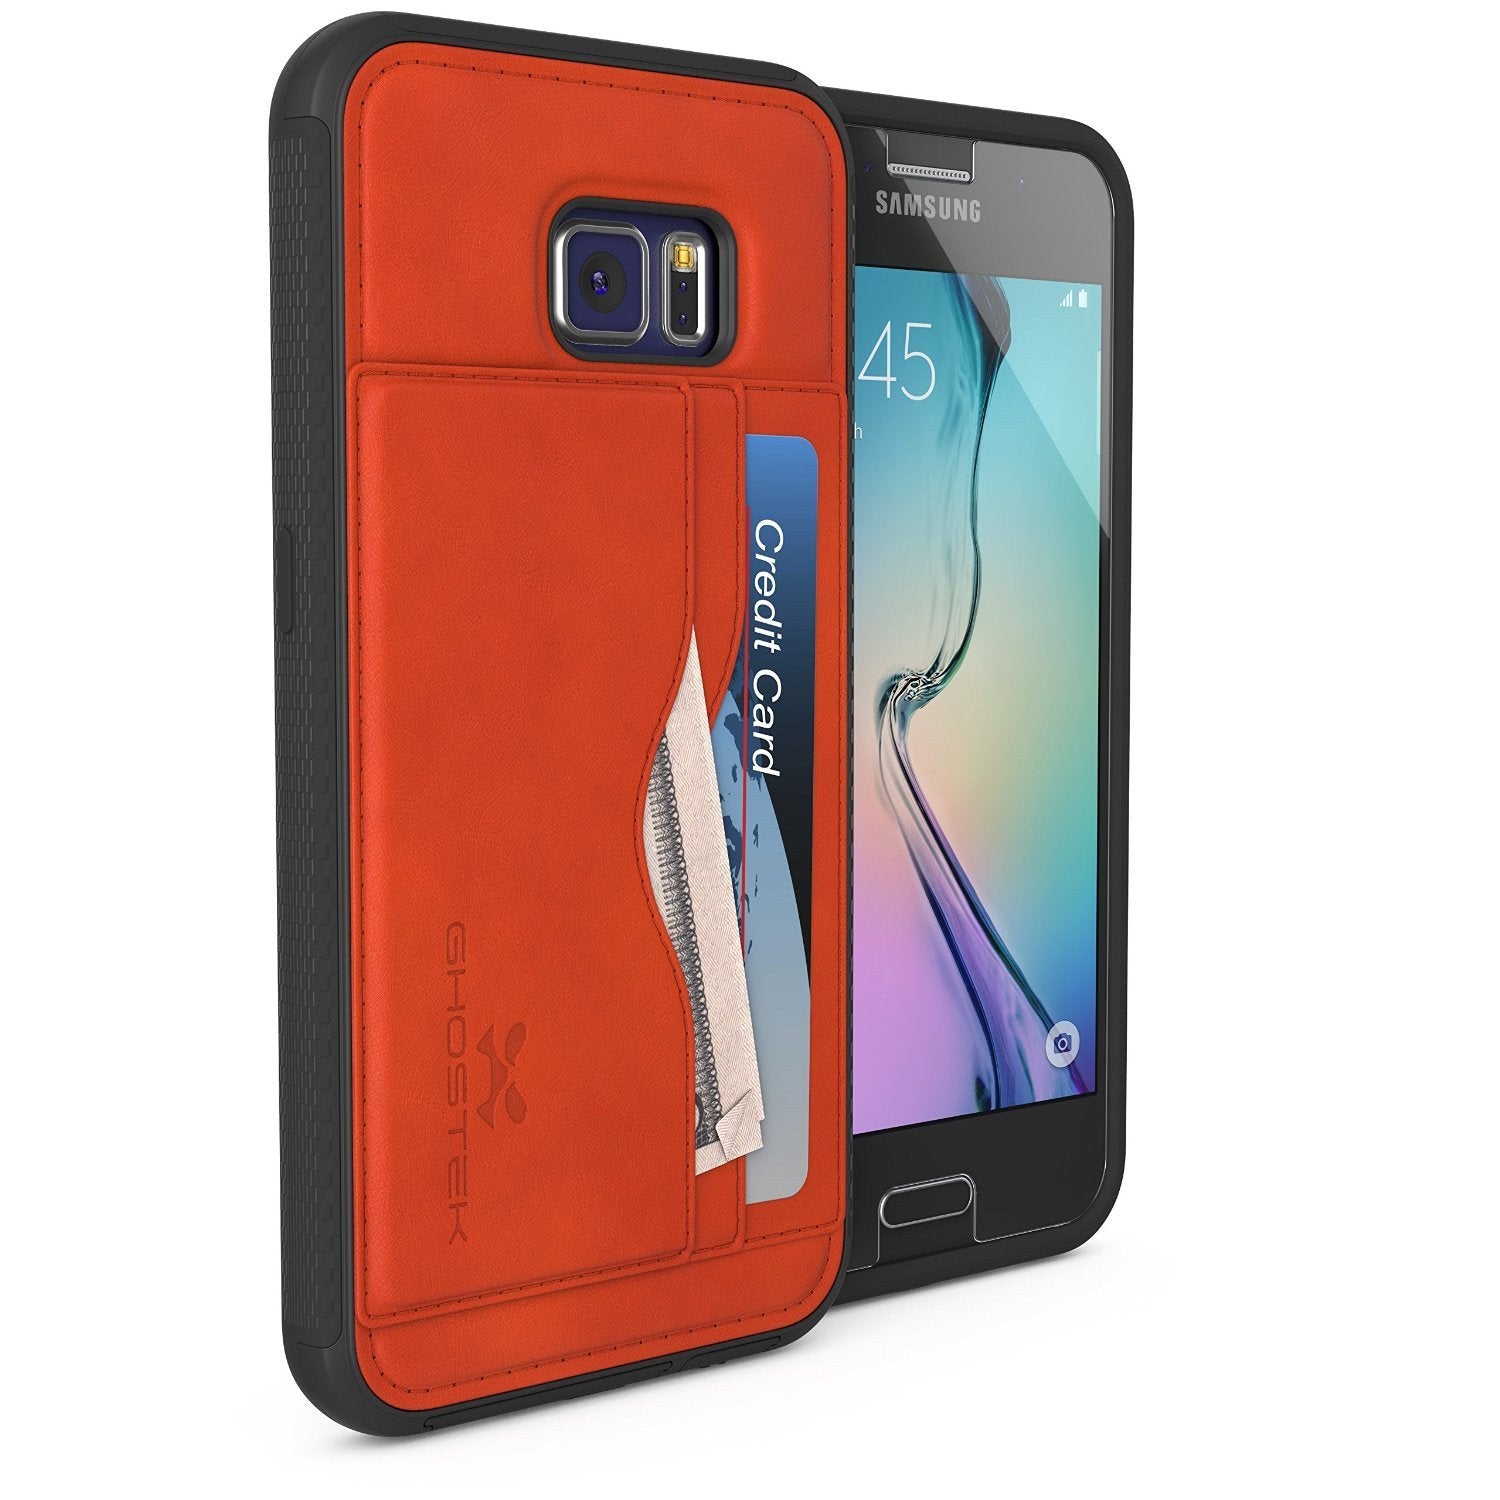 Galaxy S6 Wallet Case, Ghostek Stash Brown Wallet Case w/ Tempered Glass | Lifetime Warranty